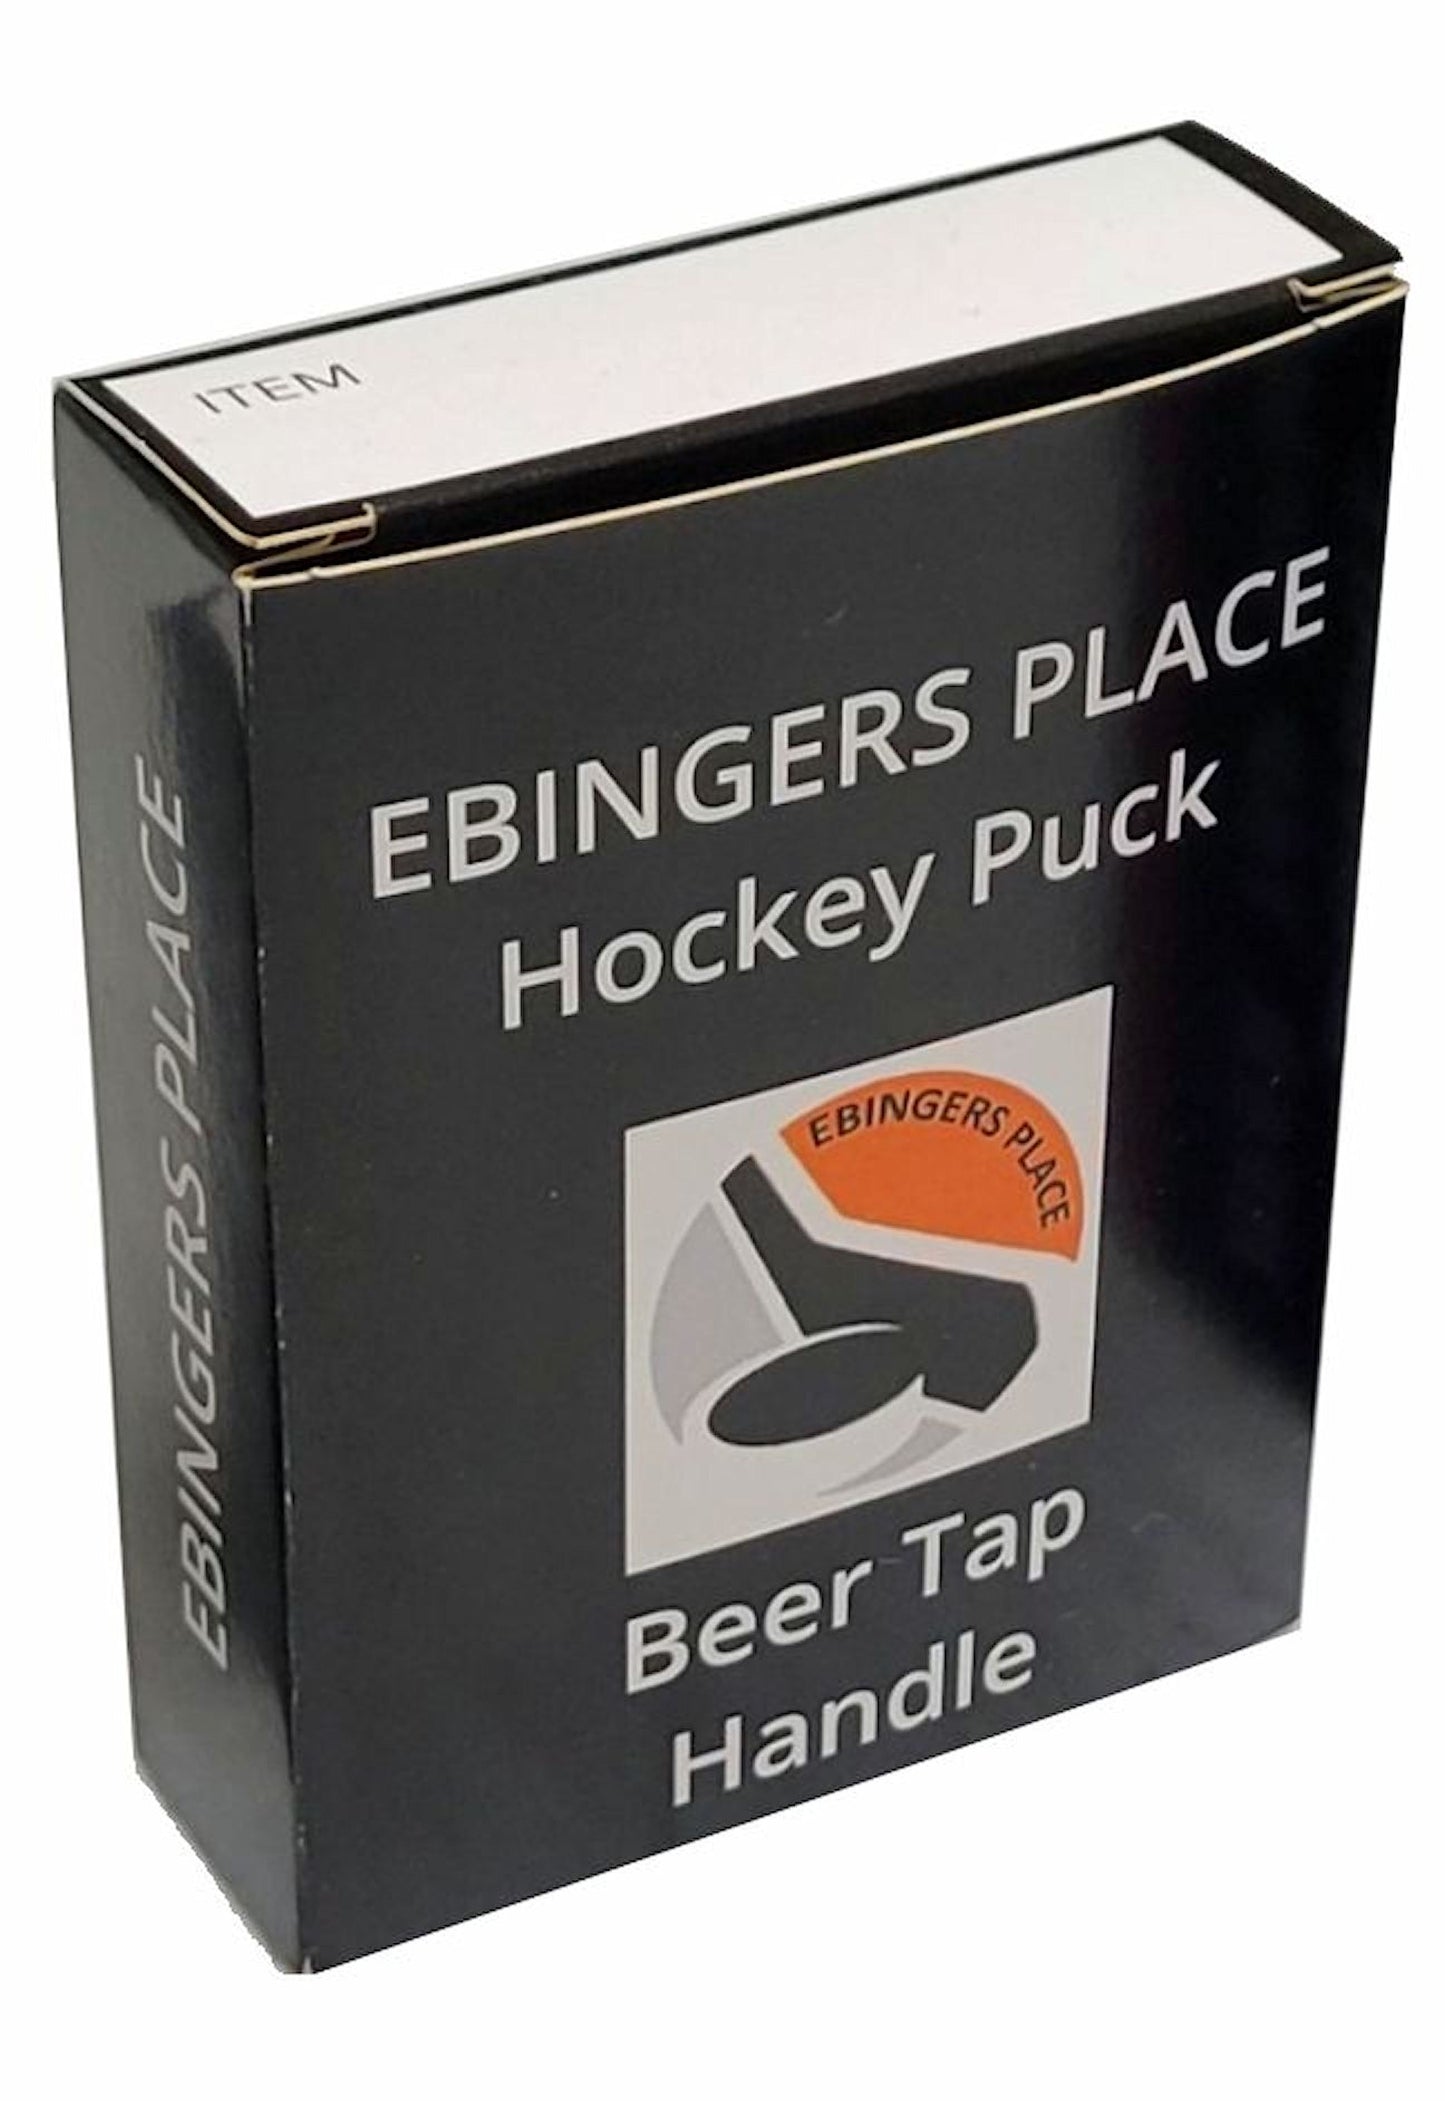 Tampa Bay Lightning Reverse Series Hockey Puck Beer Tap Handle